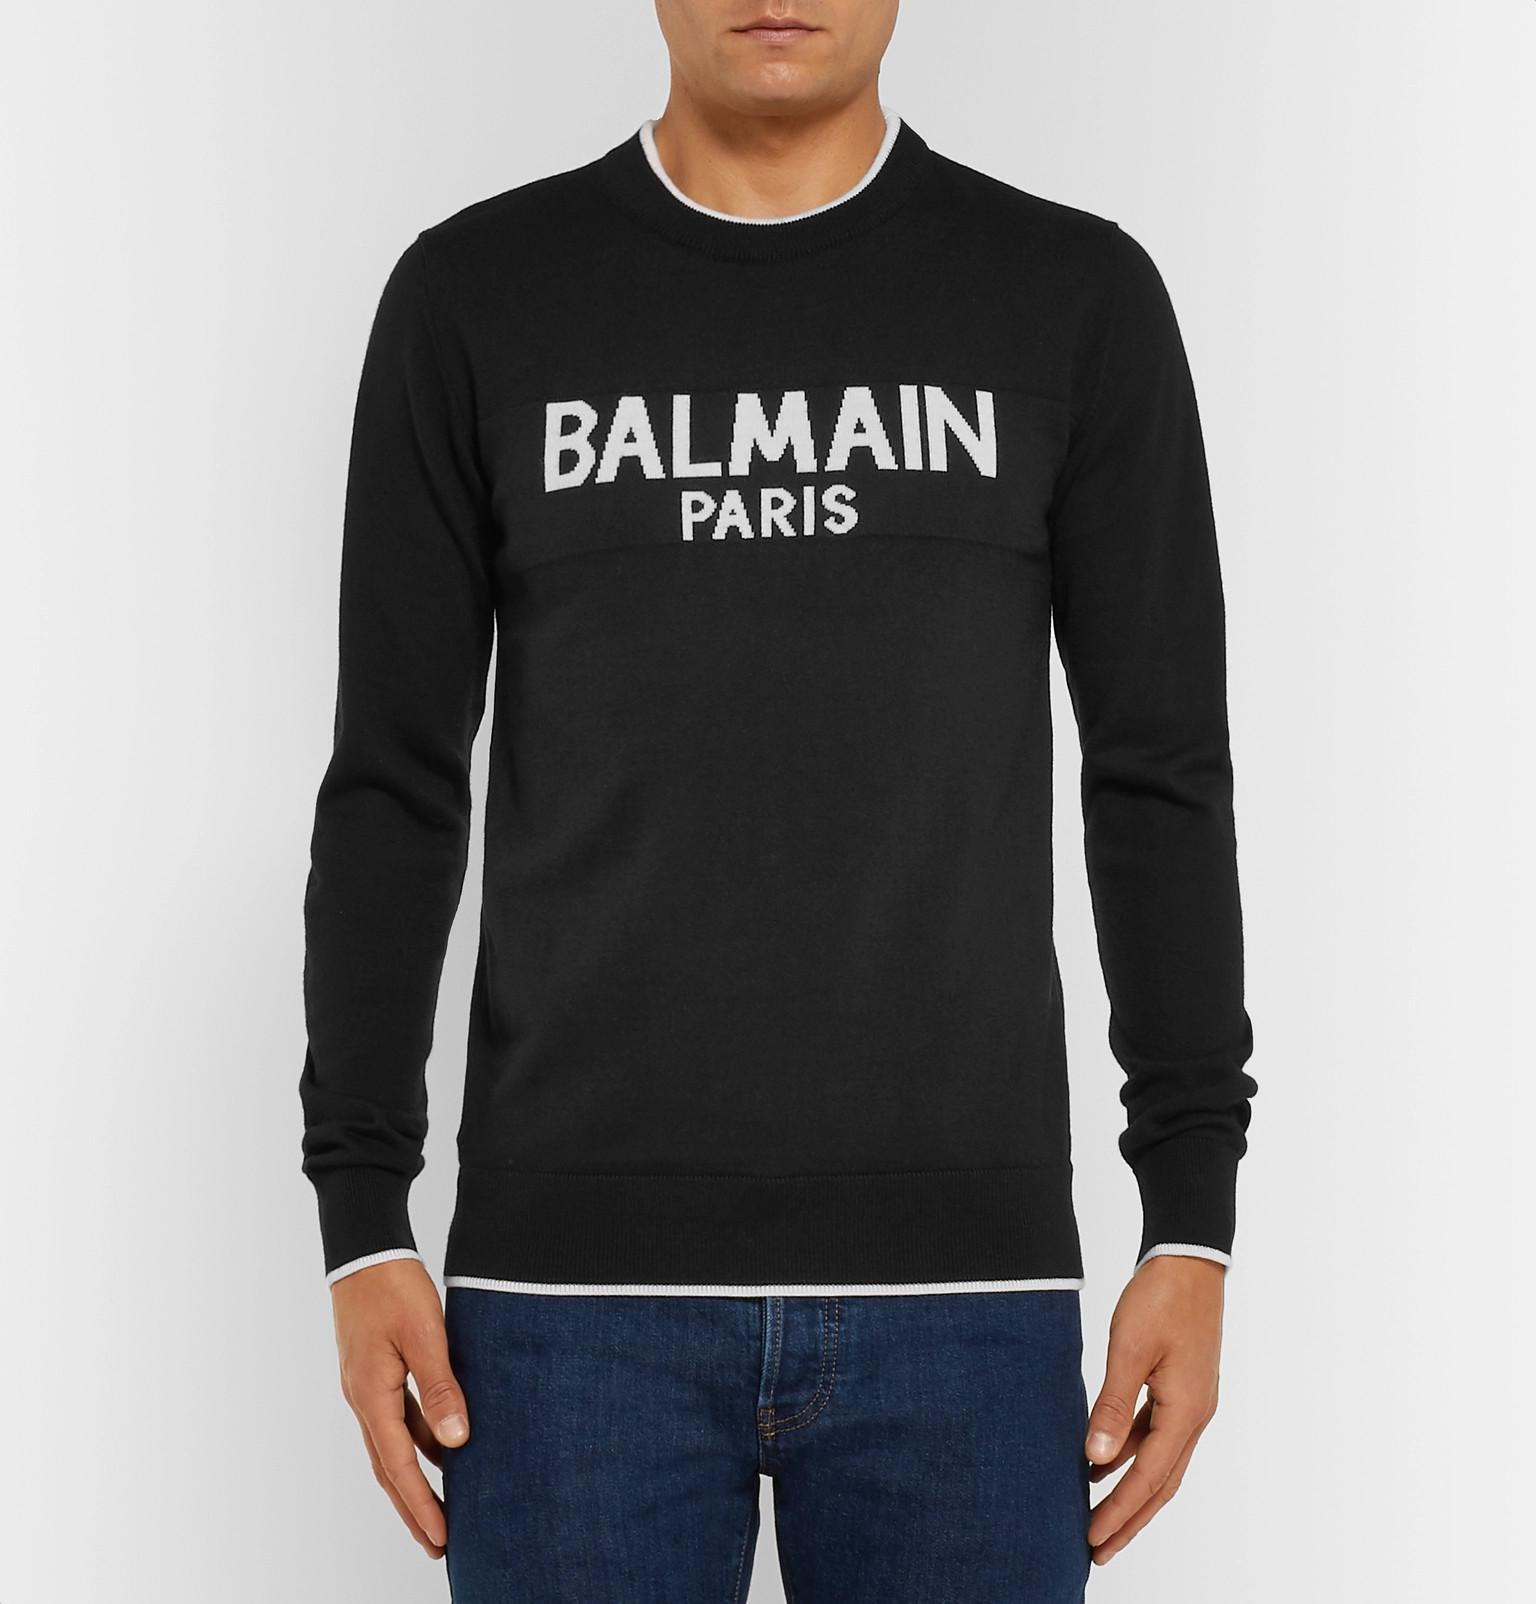 Balmain Logo-intarsia Wool Sweater in Black for Men - Lyst